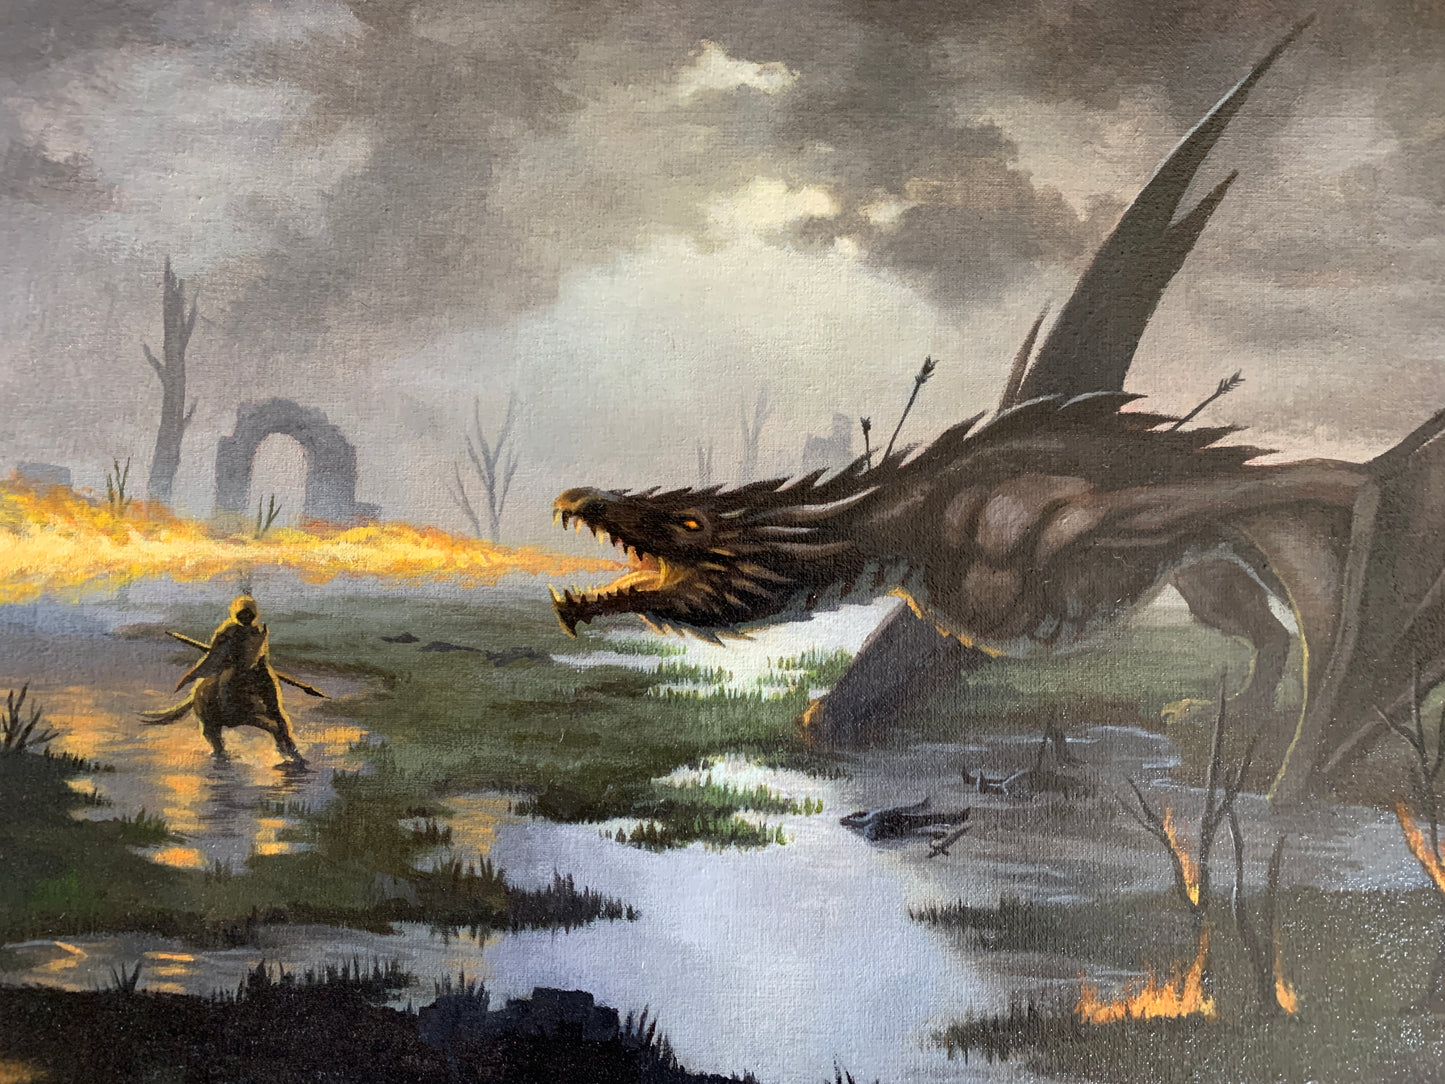 Original painting - The Dragon-Burnt Lake